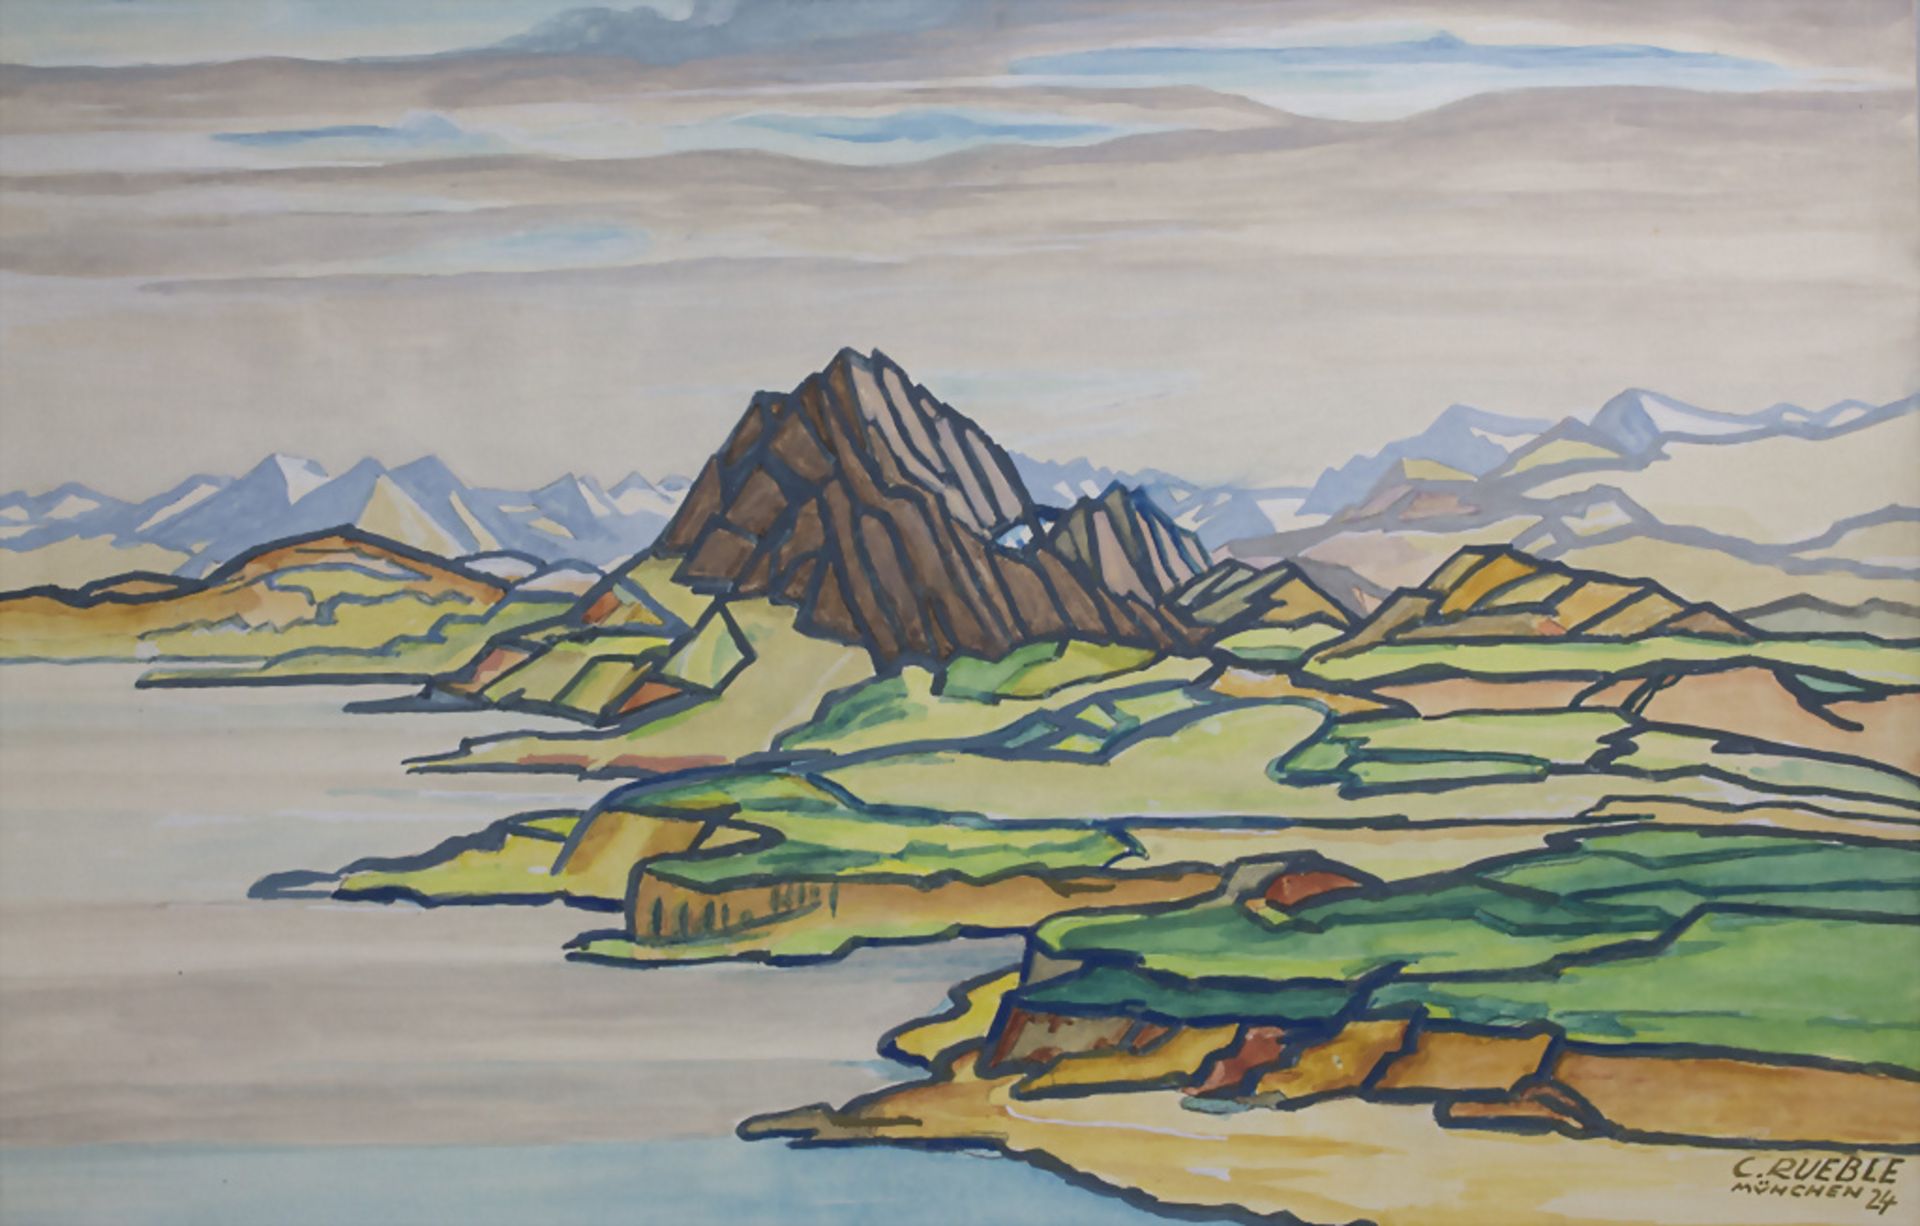 Carl Rüble (*1894-?), 'Graubündener Berge' / 'Graubünden mountains', 1924